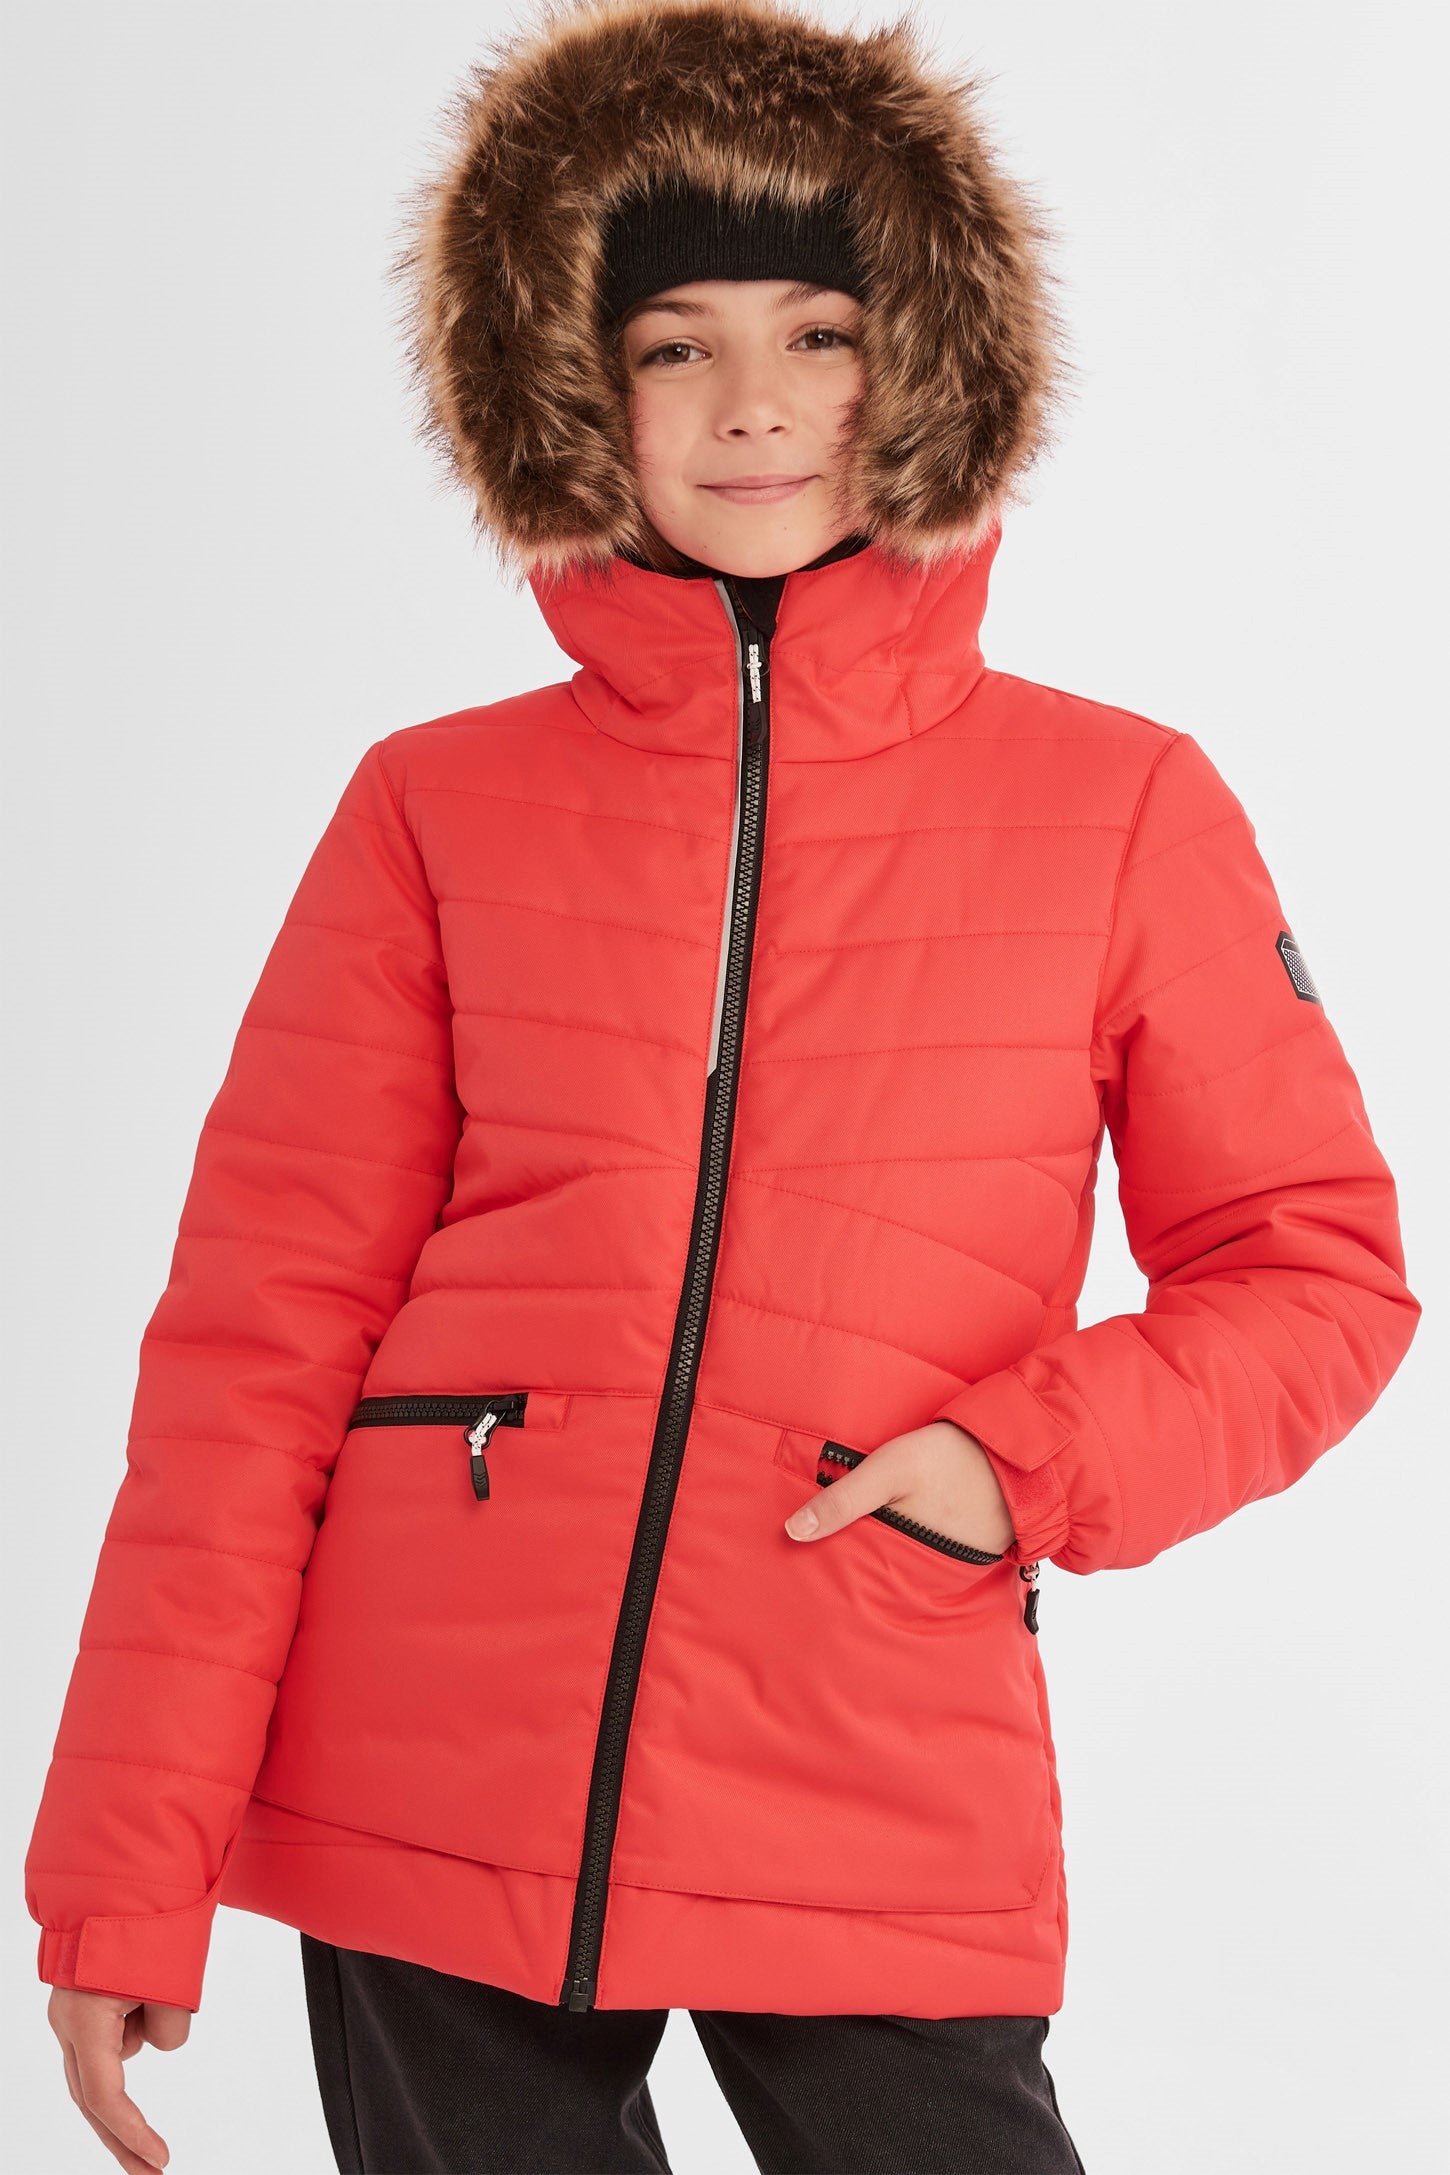 Manteau de ski hiver - Ado fille && ROSE